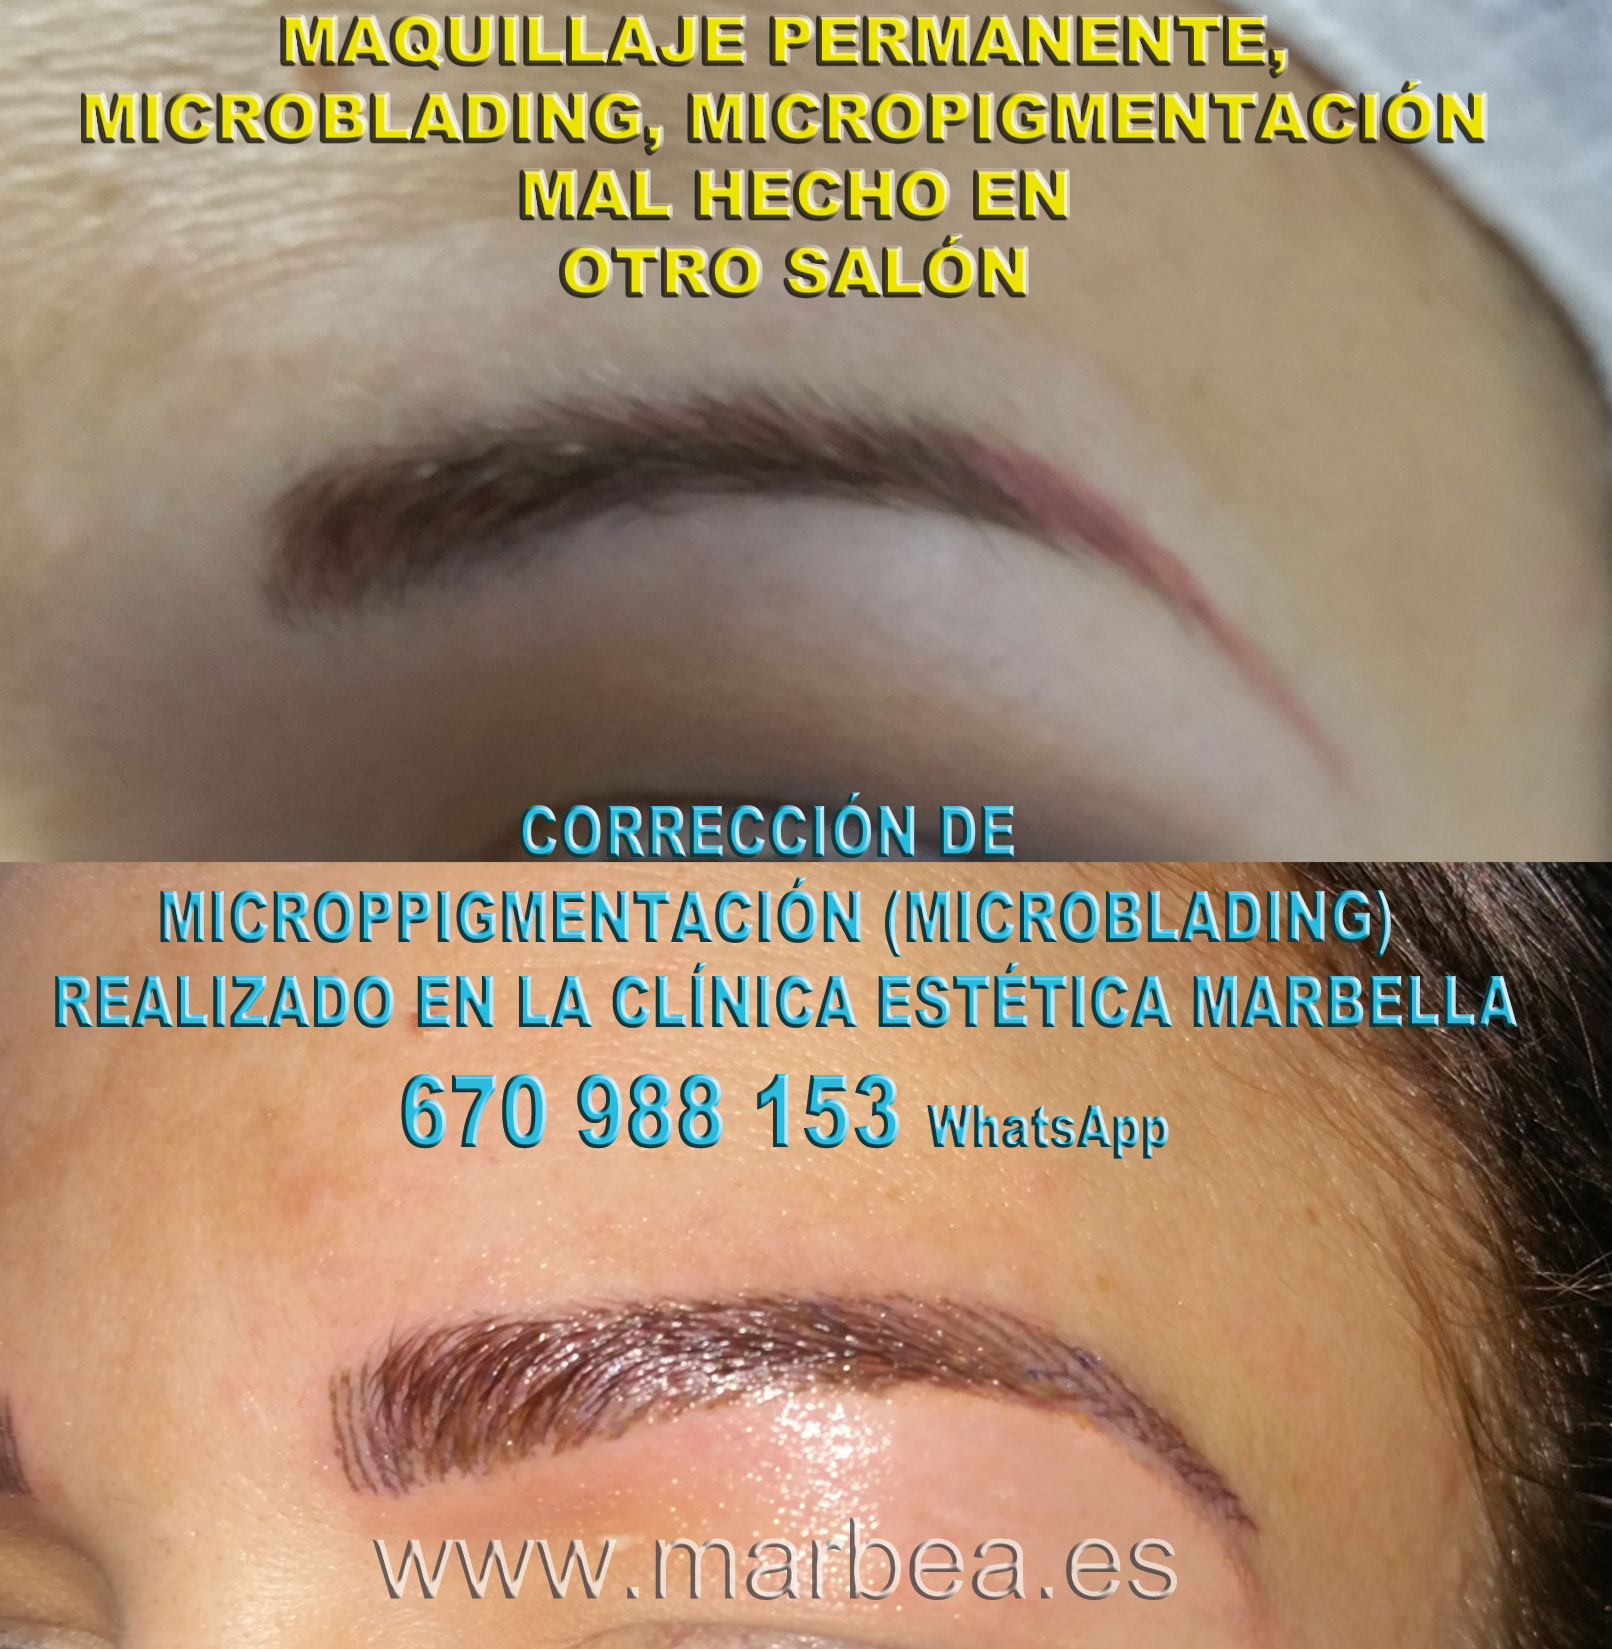 Borrar microblading mal hecha clínica estética tatuaje propone micropigmentacion correctiva de cejas,reparamos microppigmentacion mal hechos